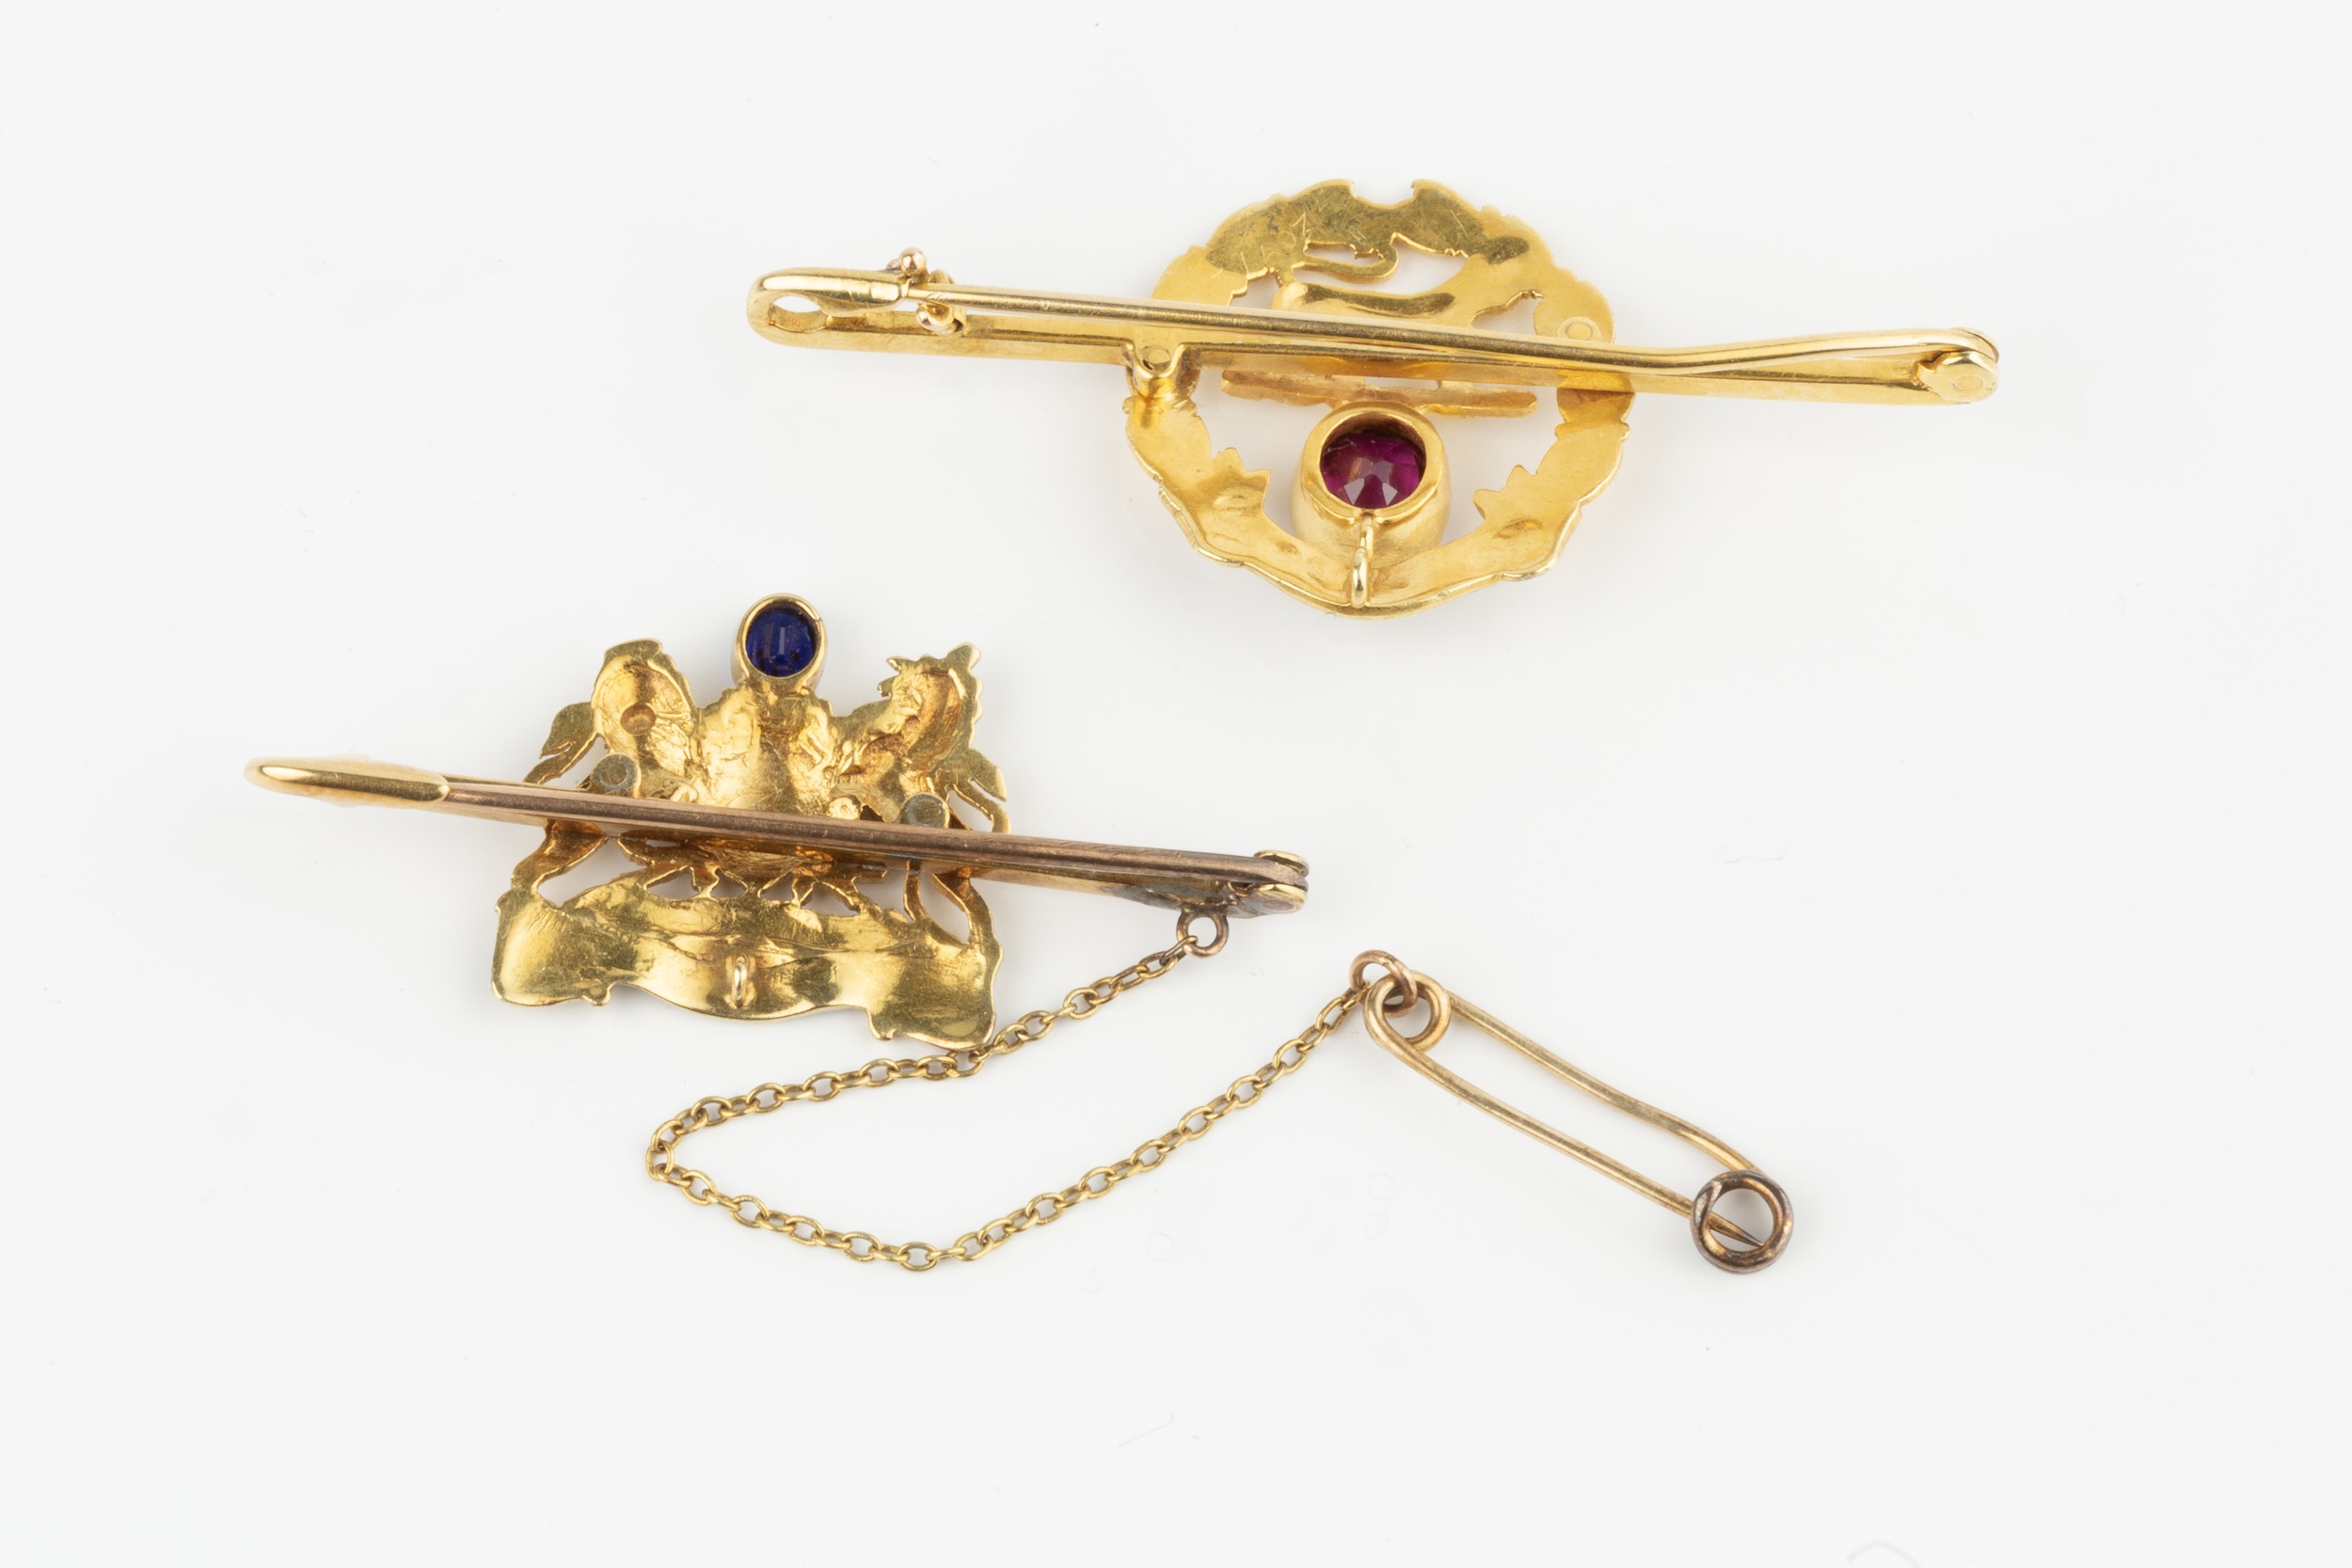 A 15ct gold, enamel and gem set regimental brooch, for the Hampshire regiment, of wreath design with - Image 2 of 2